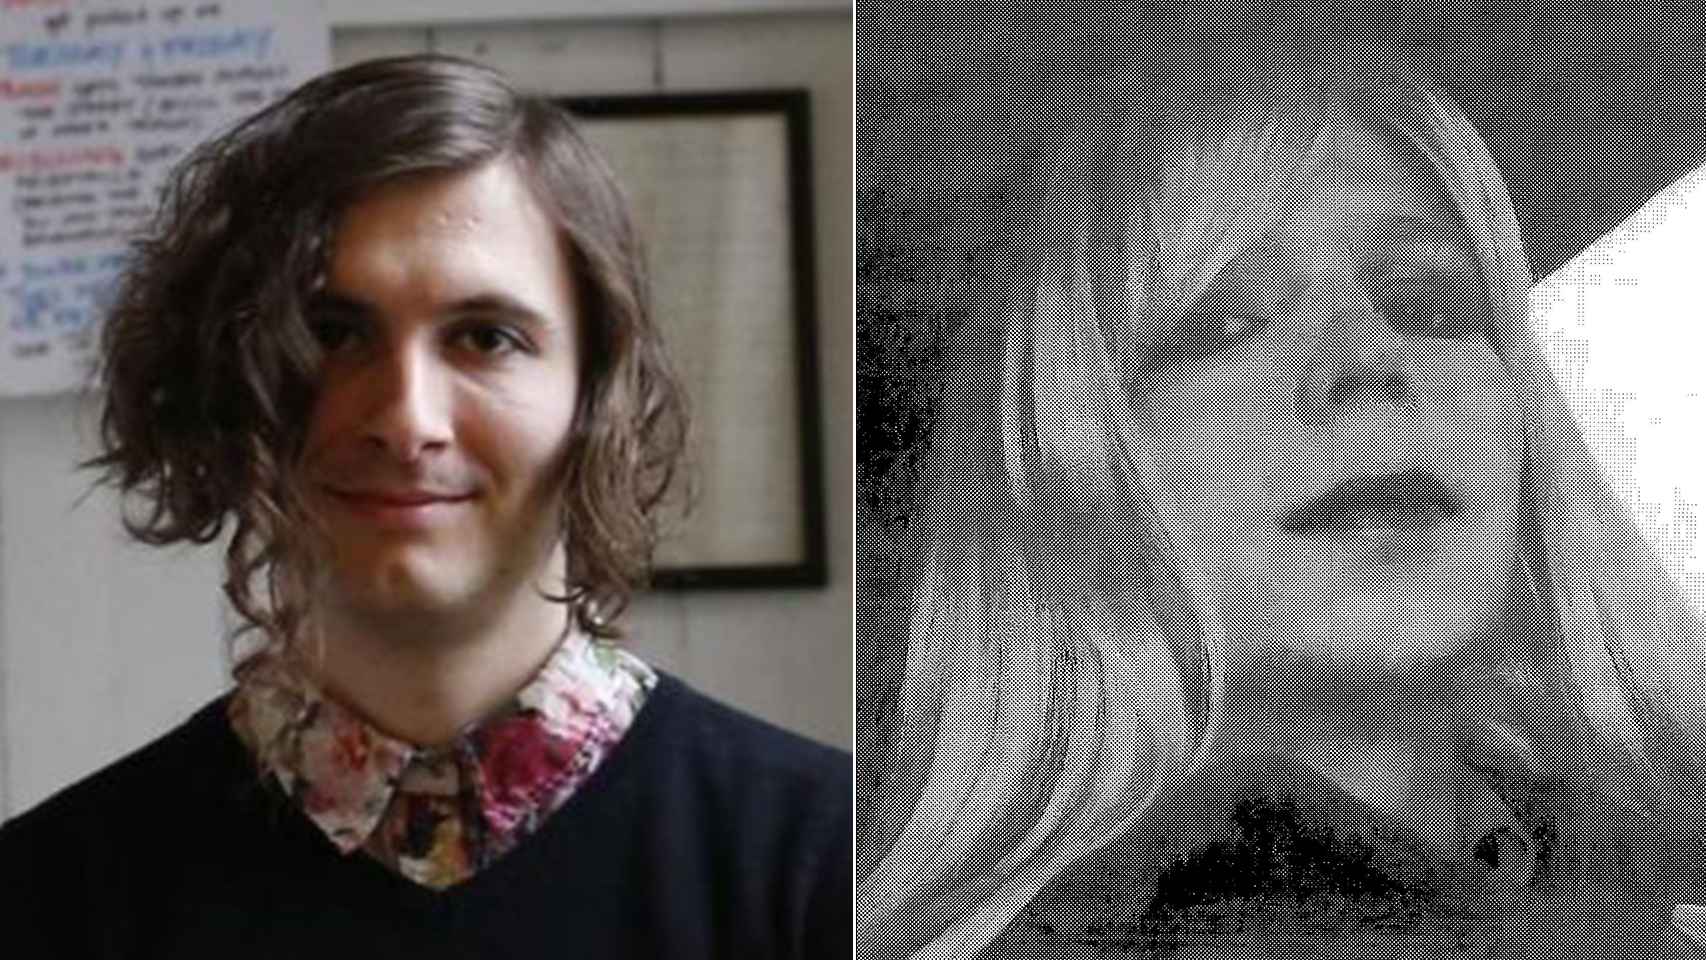 La activista trans que ha salvado la vida de Chelsea Manning